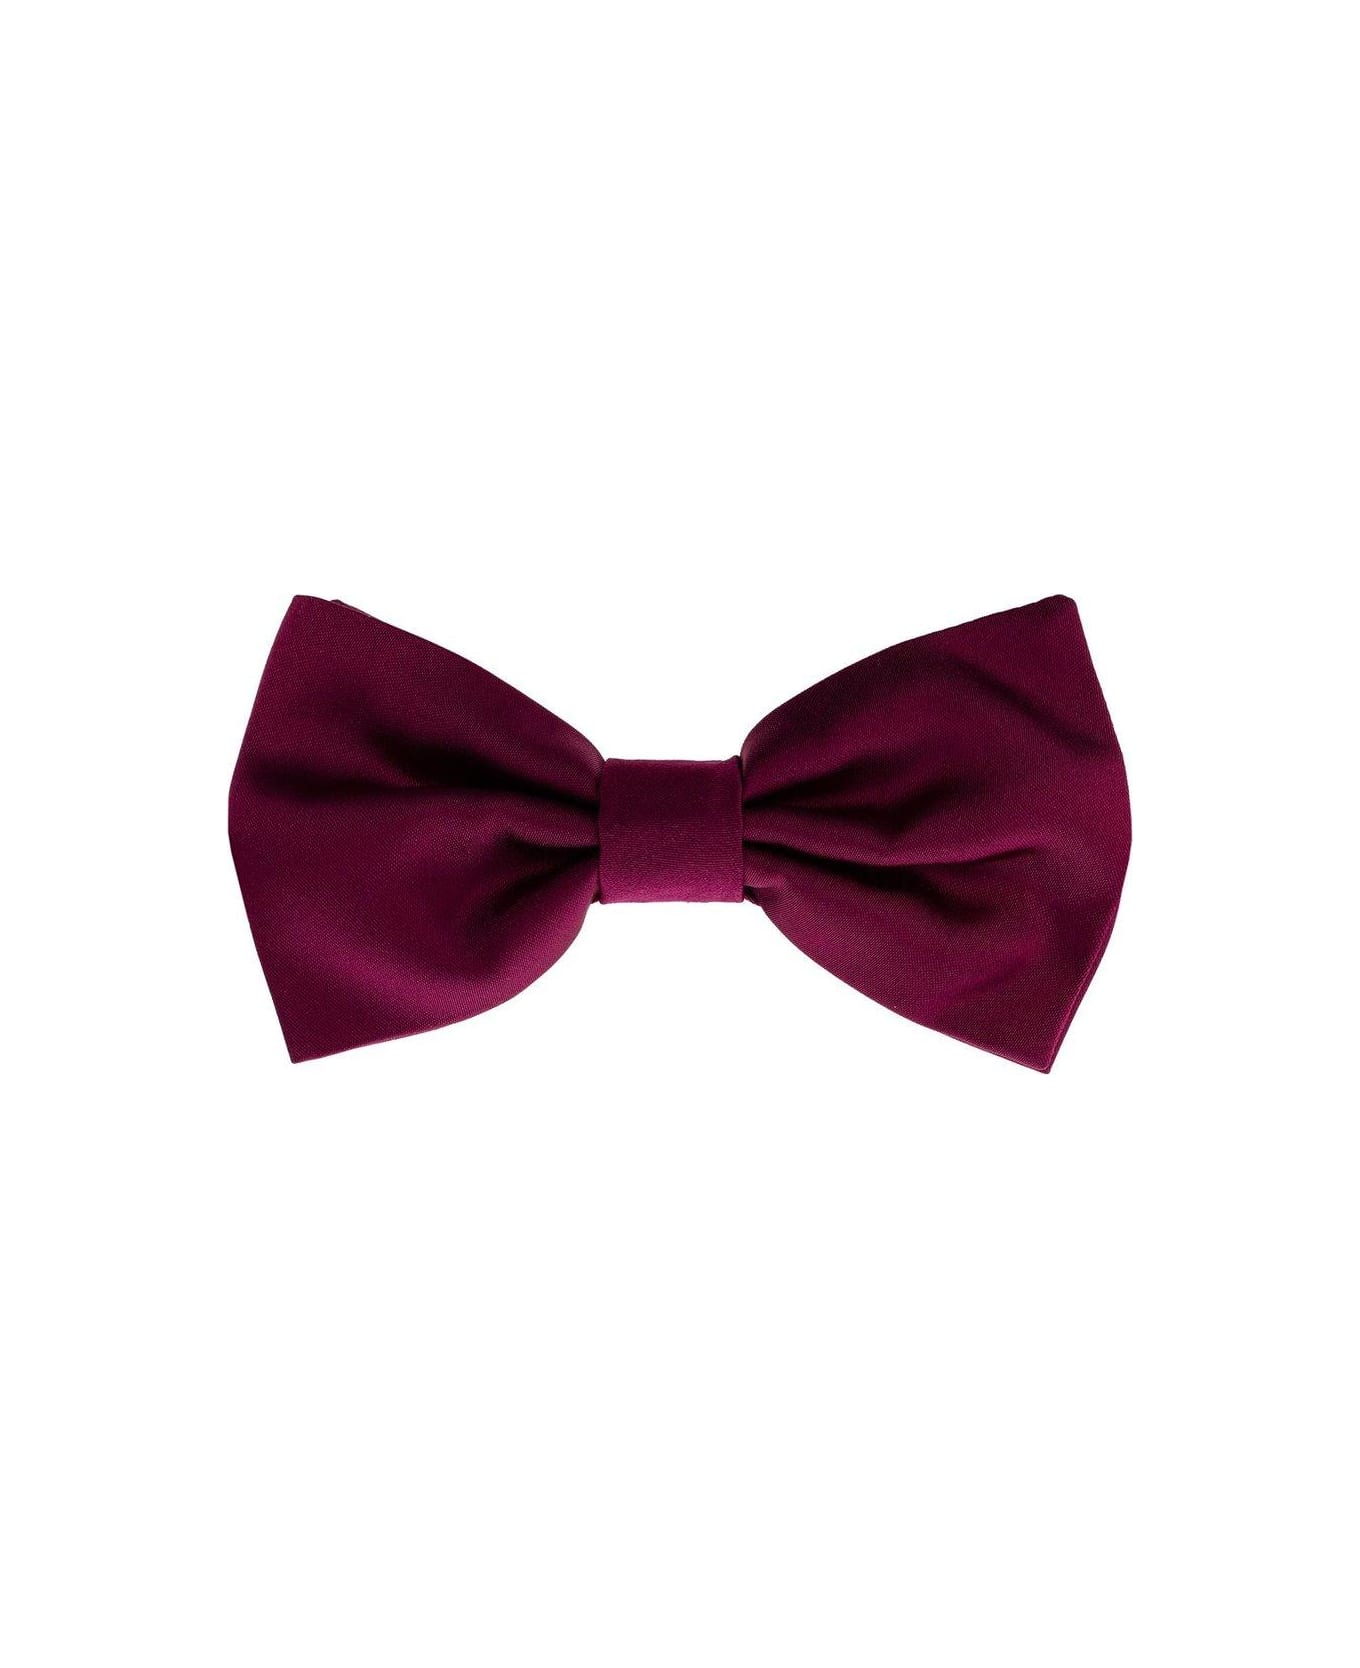 Dolce & Gabbana Bow Tie - Red